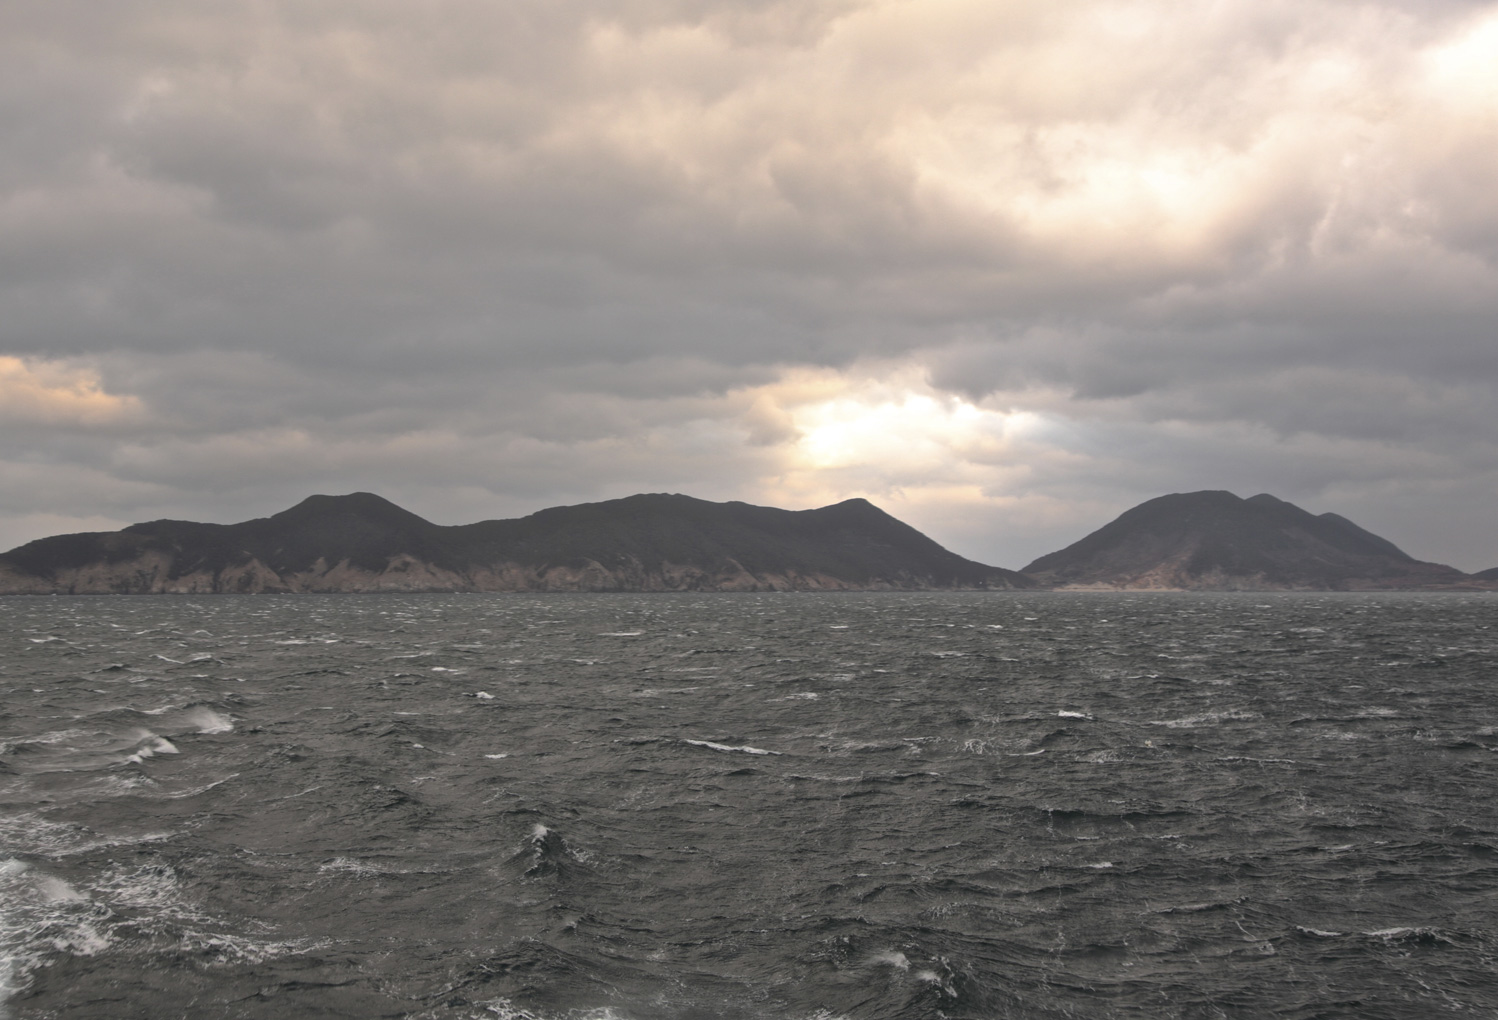 A view of Nozaki Island from the sea